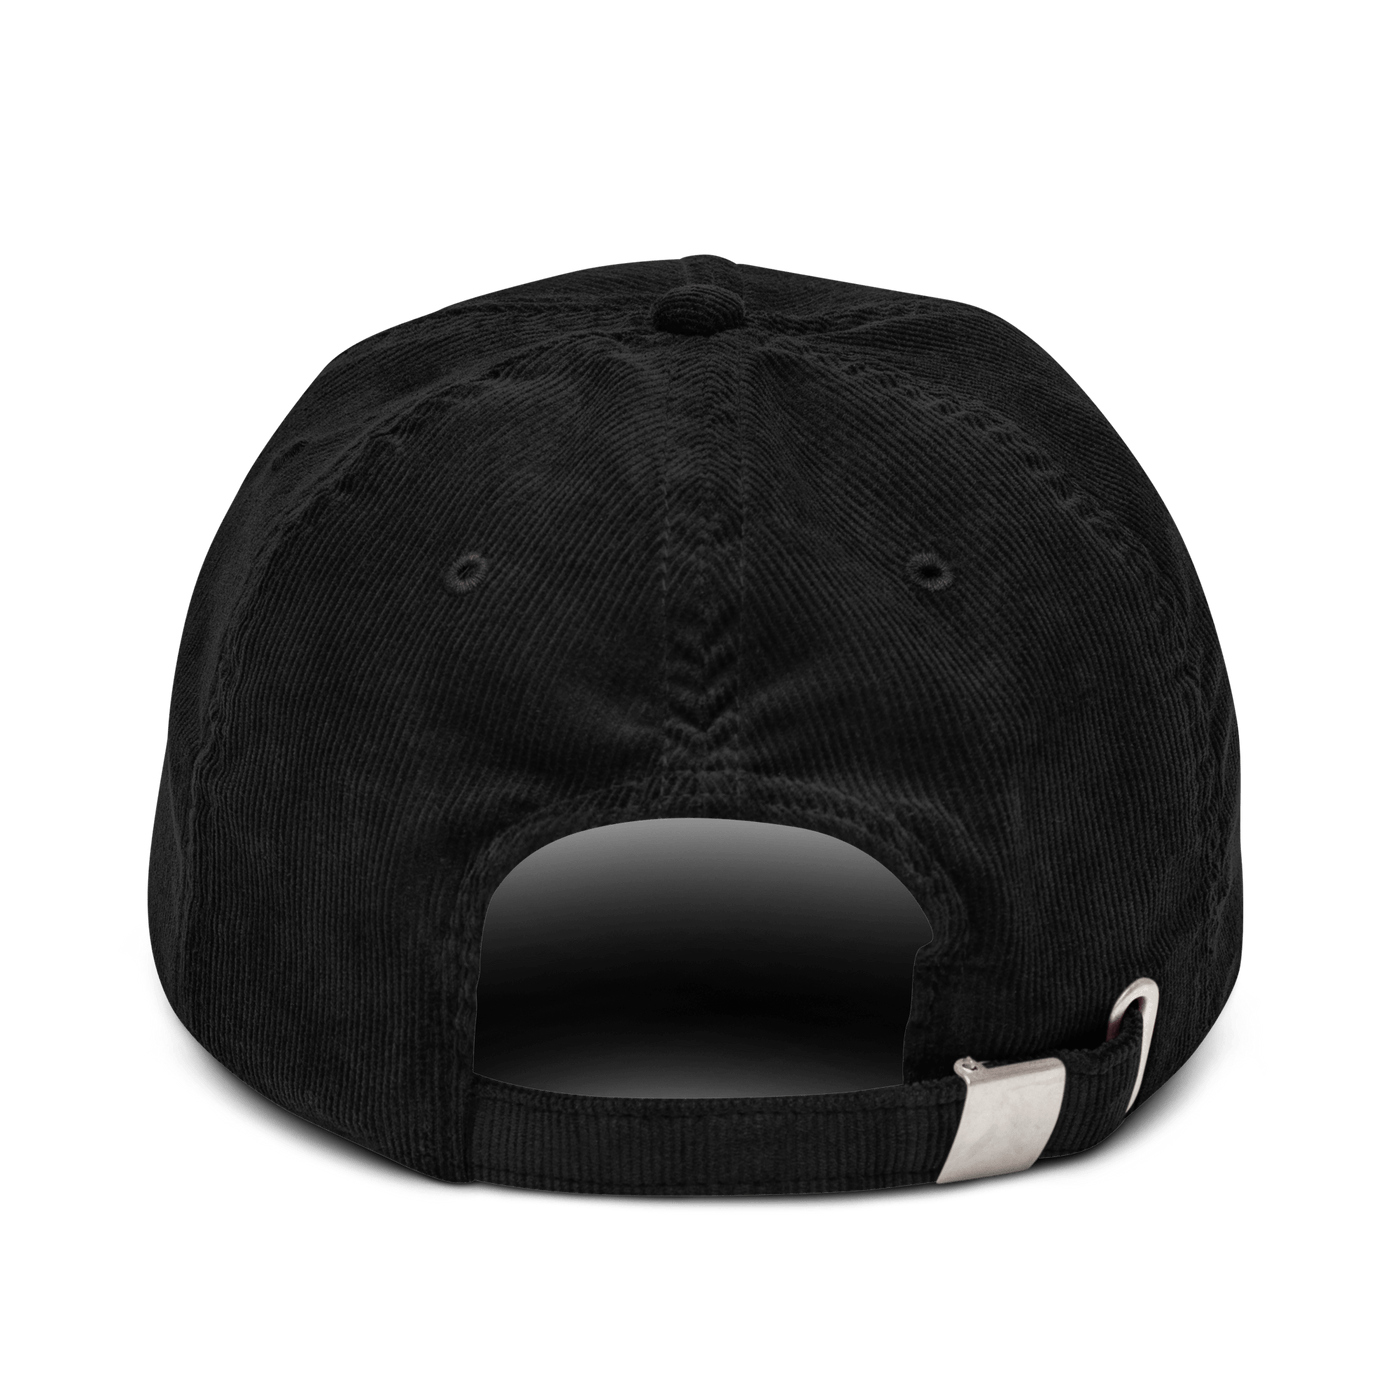 Sauerkraut Corduroy hat - Black - - Just Another Cap Store